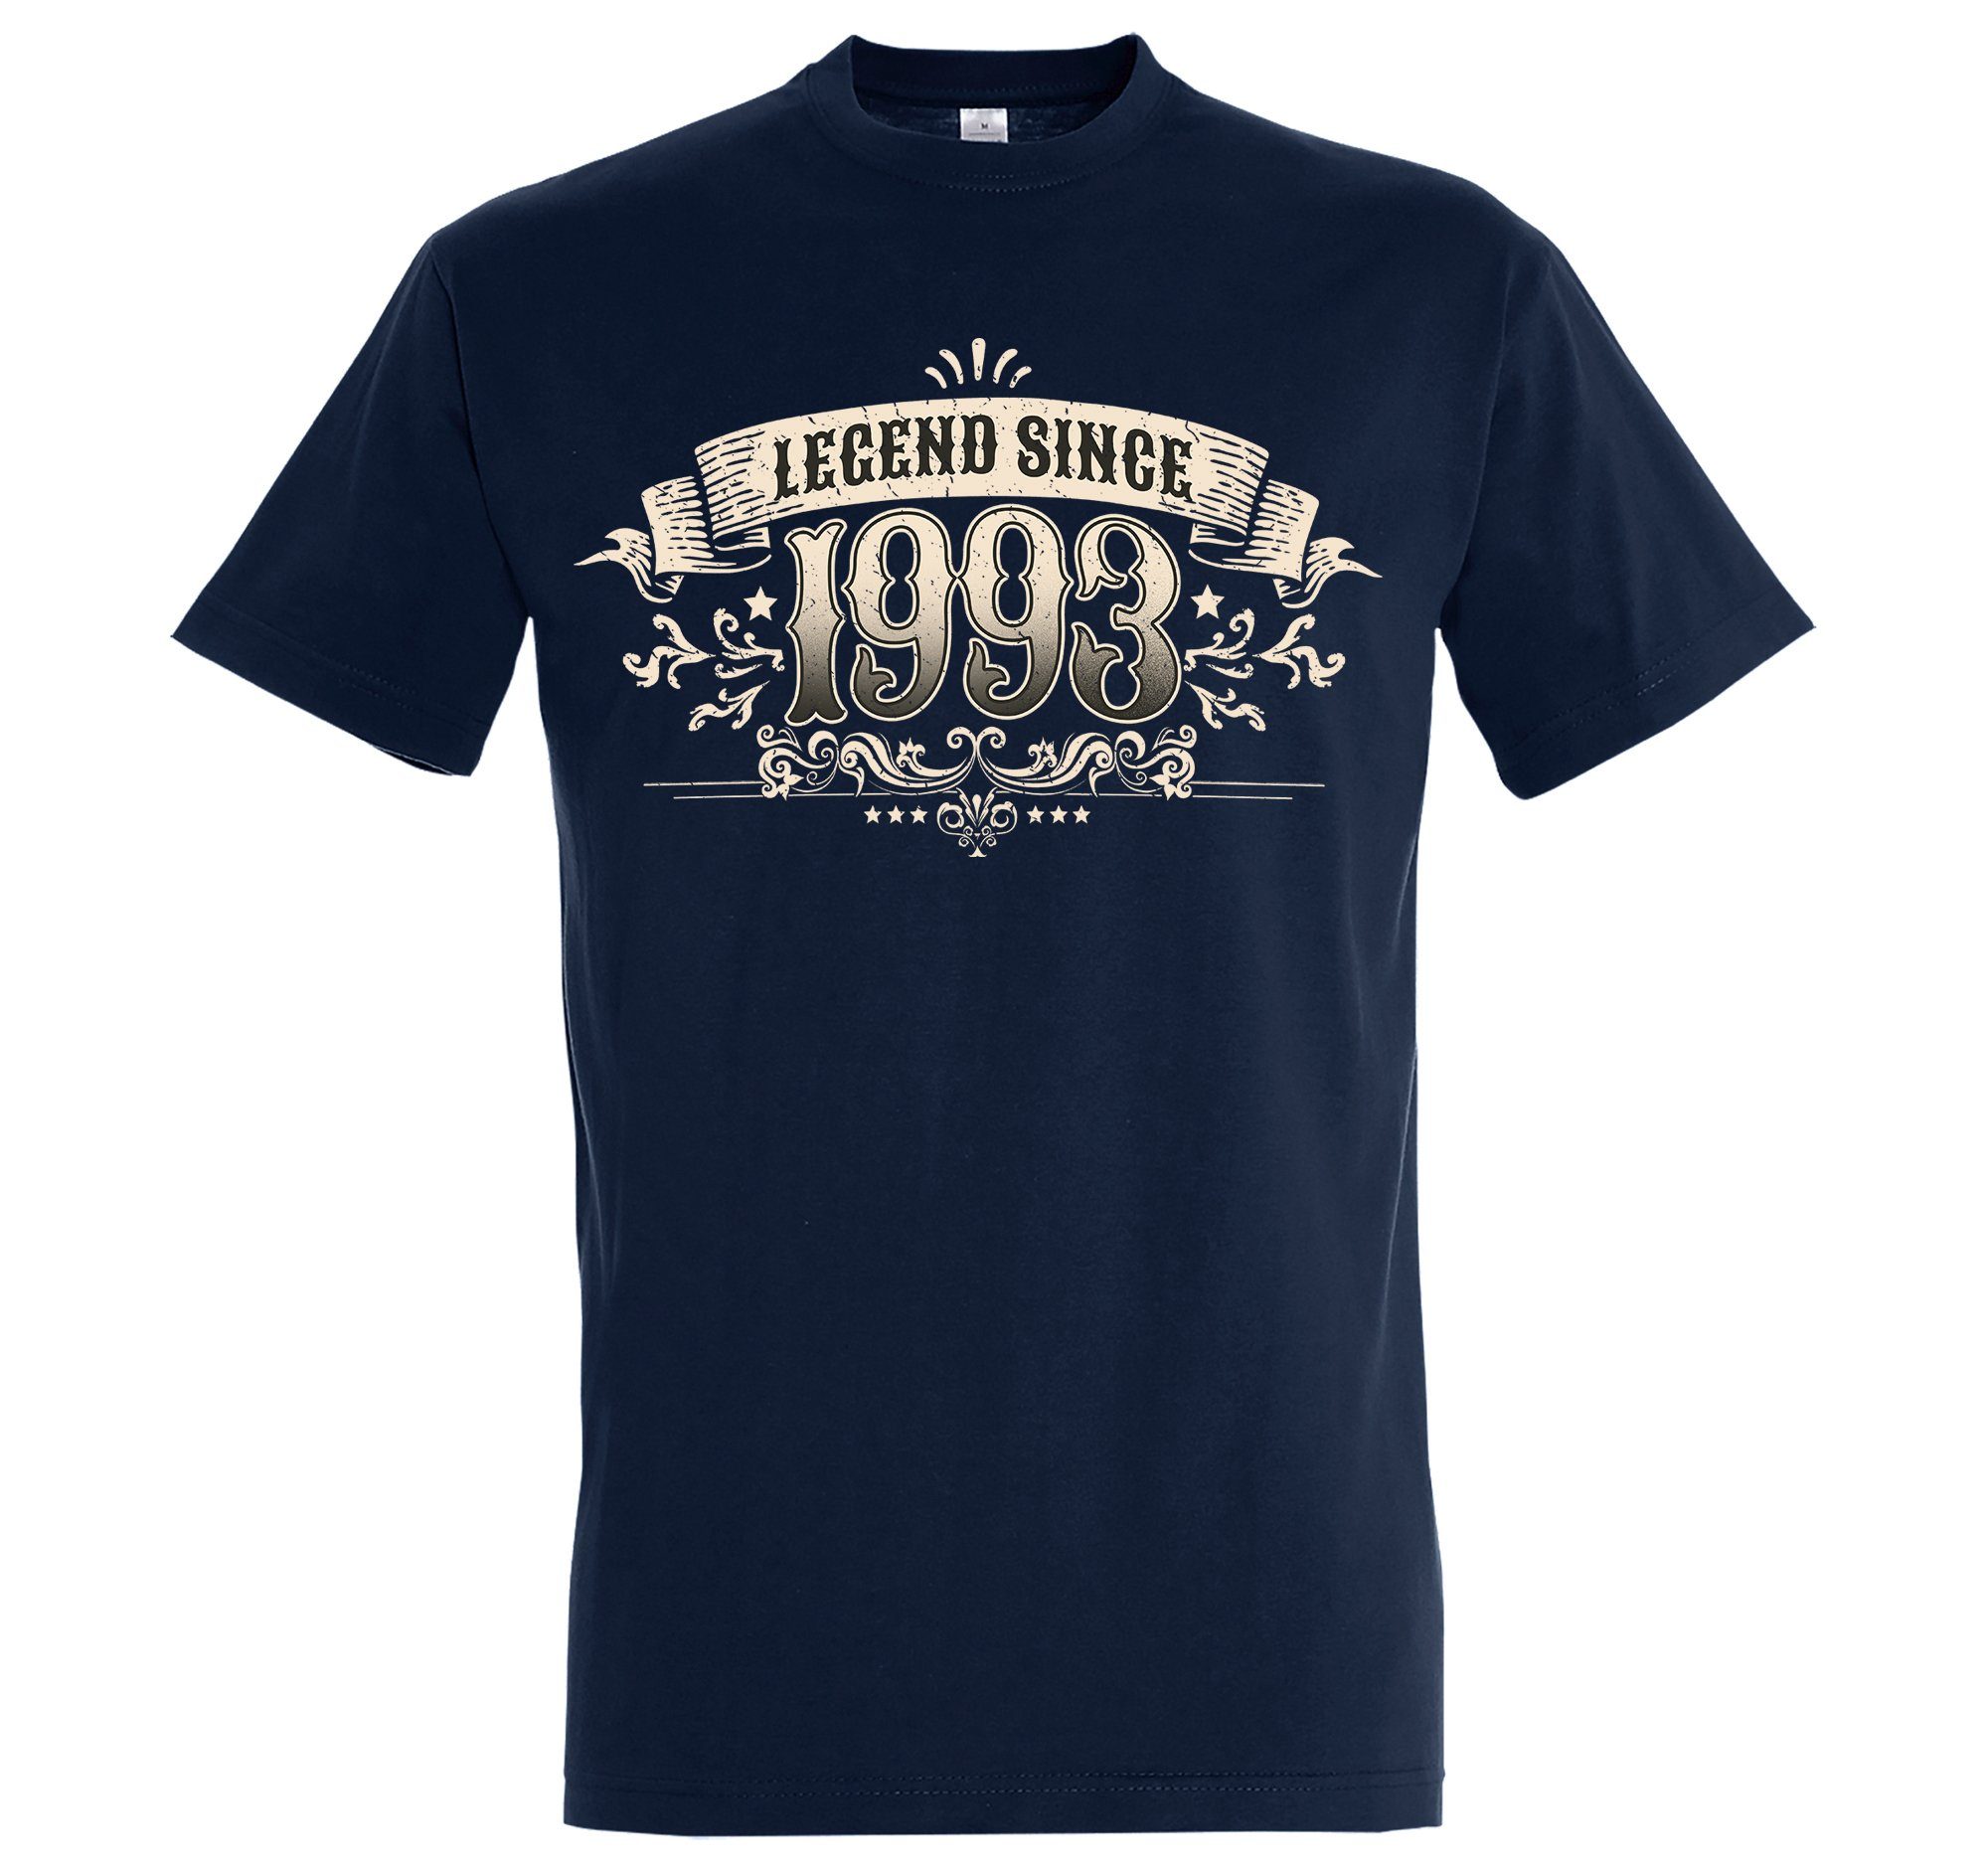 trendigem Frontprint Shirt Since mit Navyblau T-Shirt Designz 1993" Youth Herren "Legend